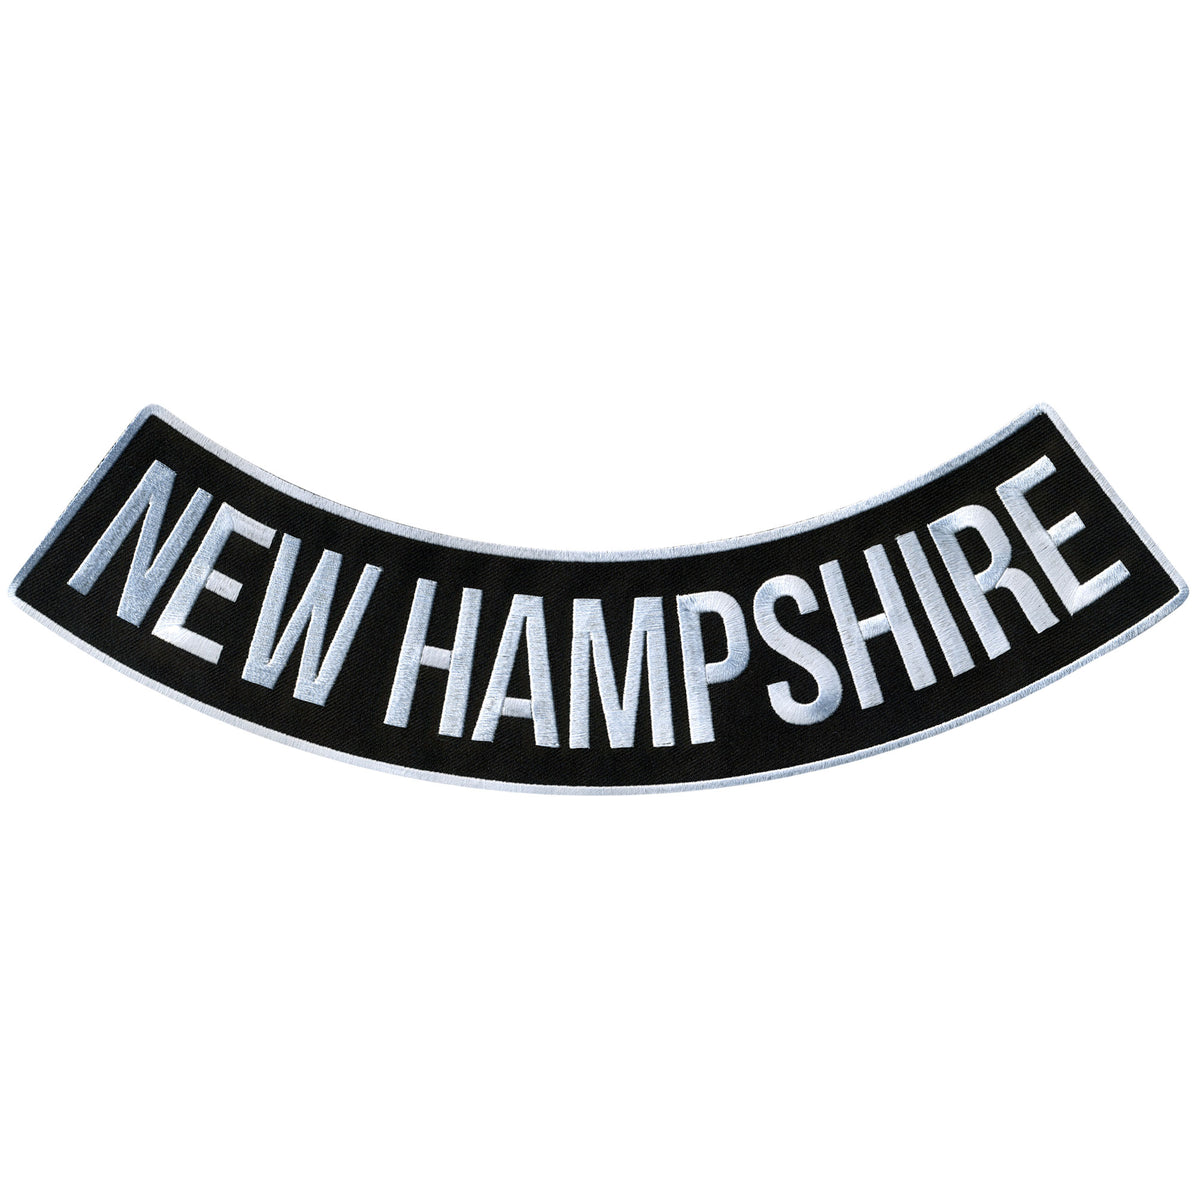 Hot Leathers New Hampshire 12” X 3” Bottom Rocker Patch